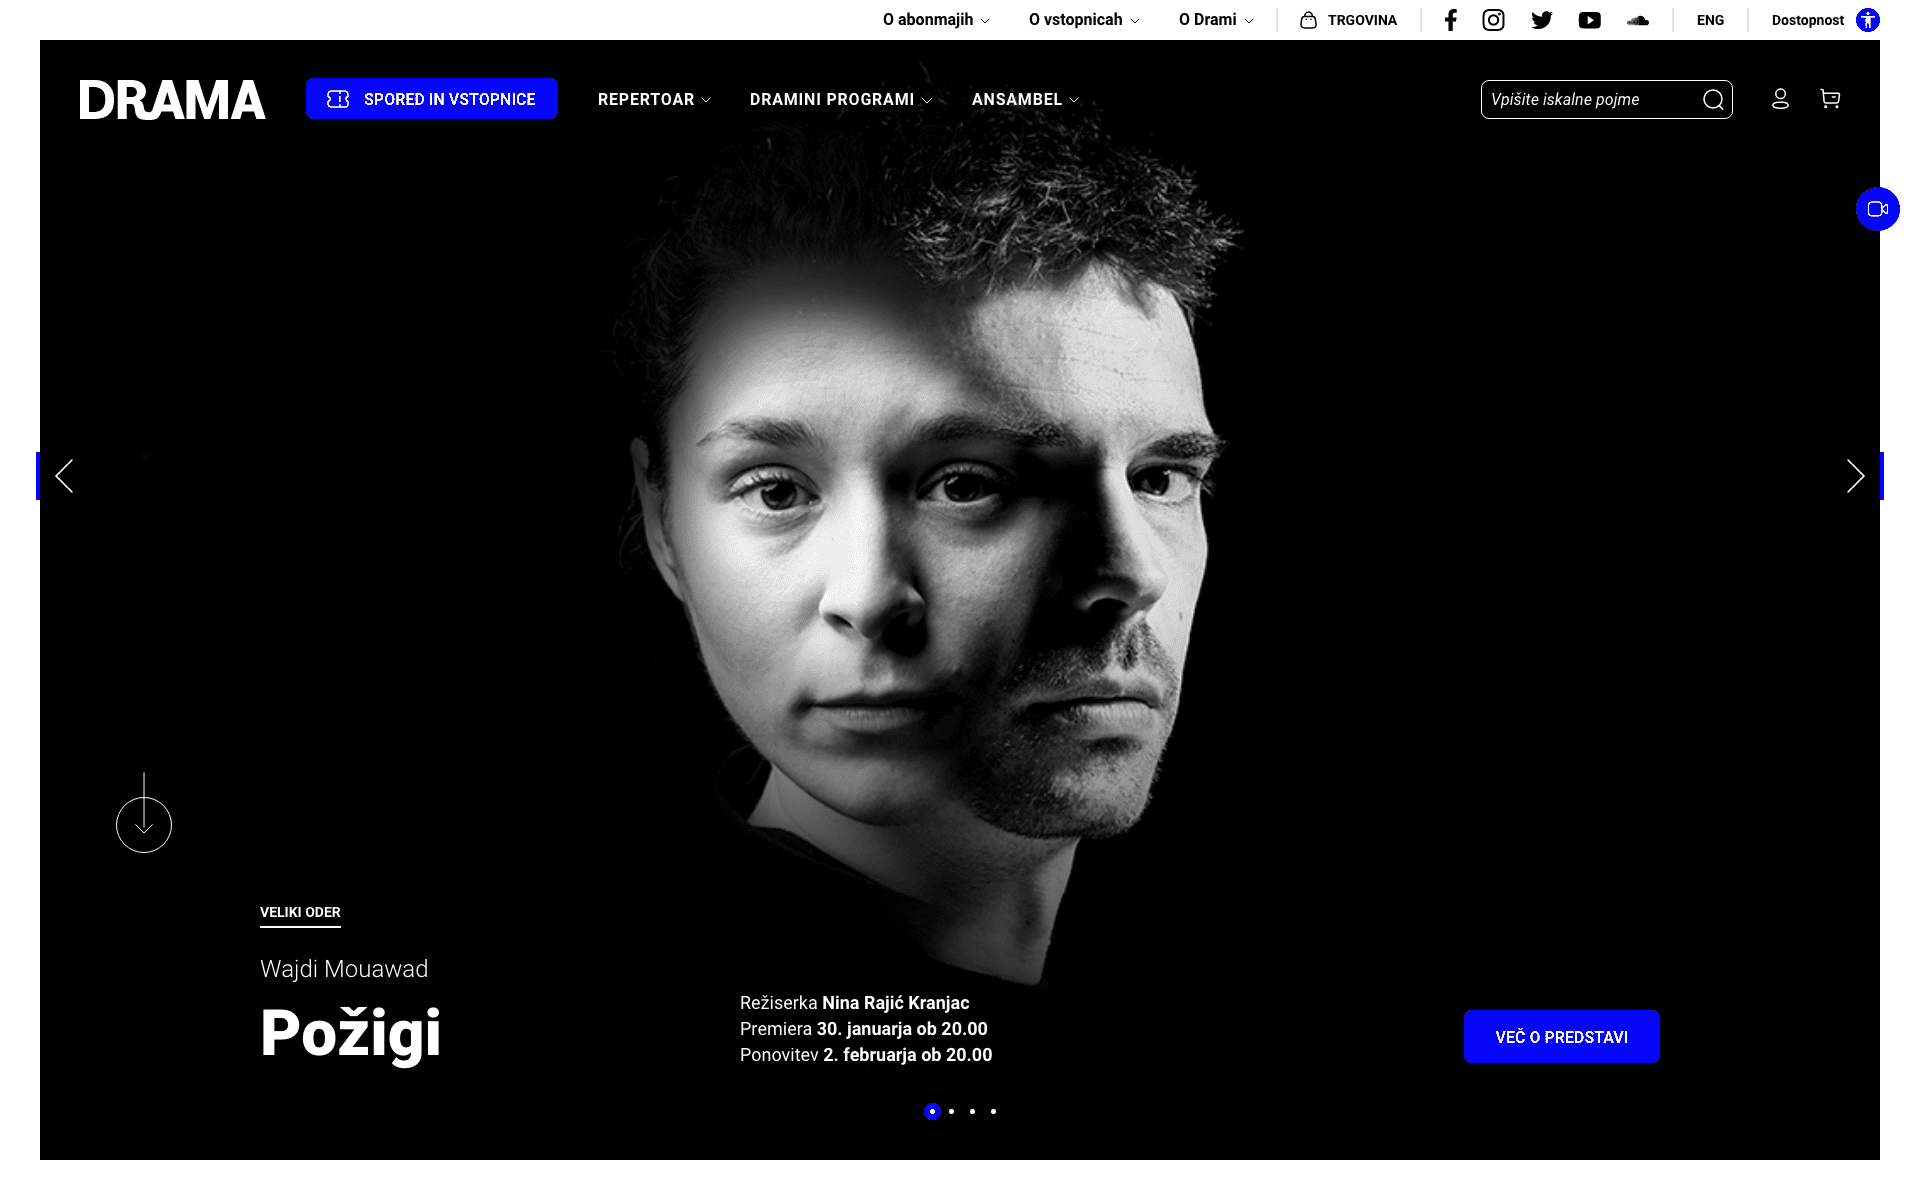 Drama website redesign